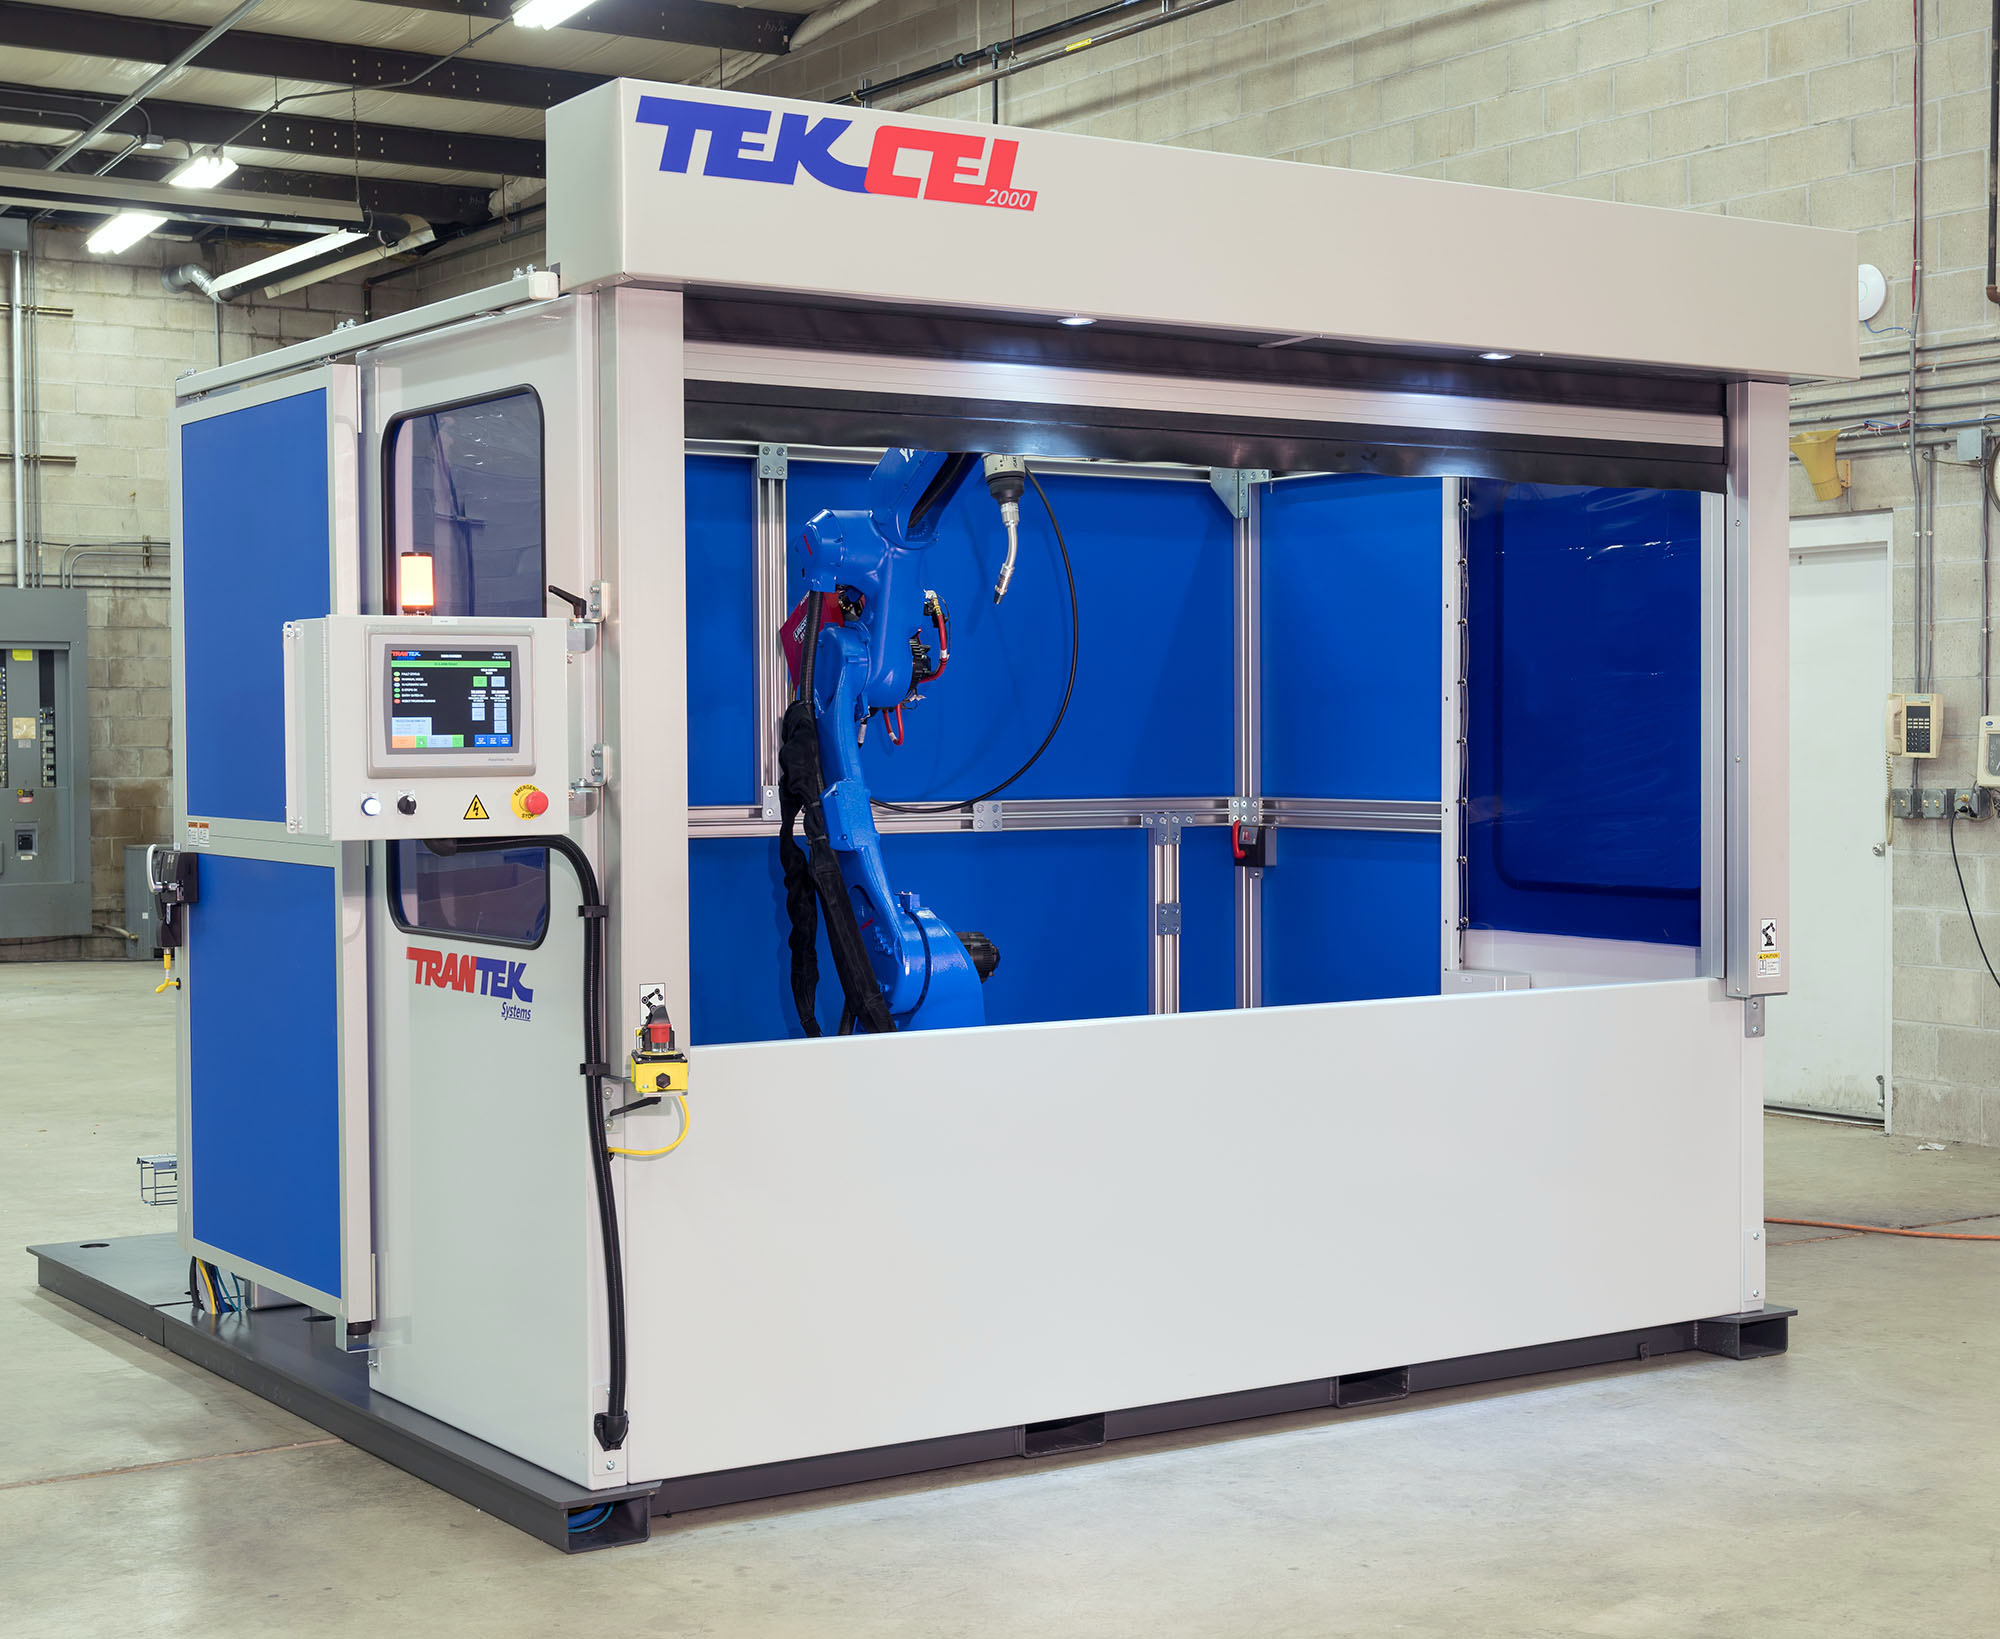 TekCel 2000 Single Door Welding Robotic Automation Cell